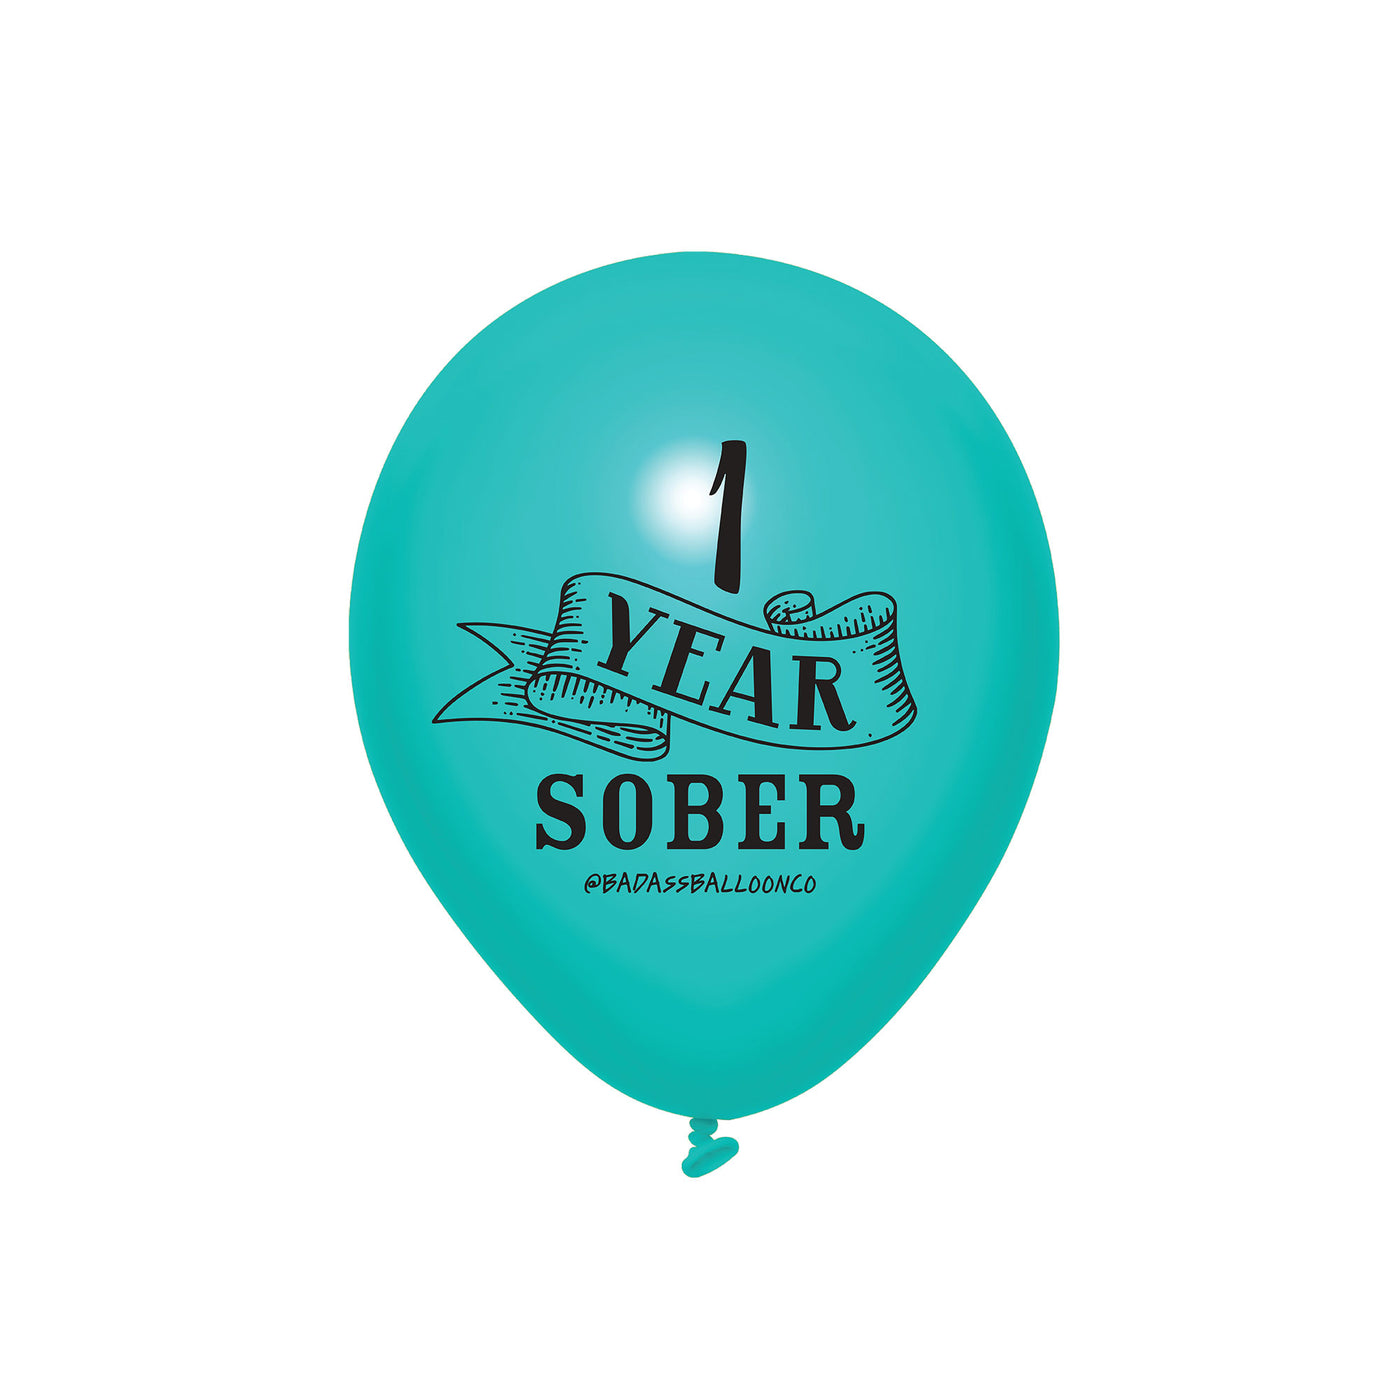 1 year Sober | Soberversary Balloons